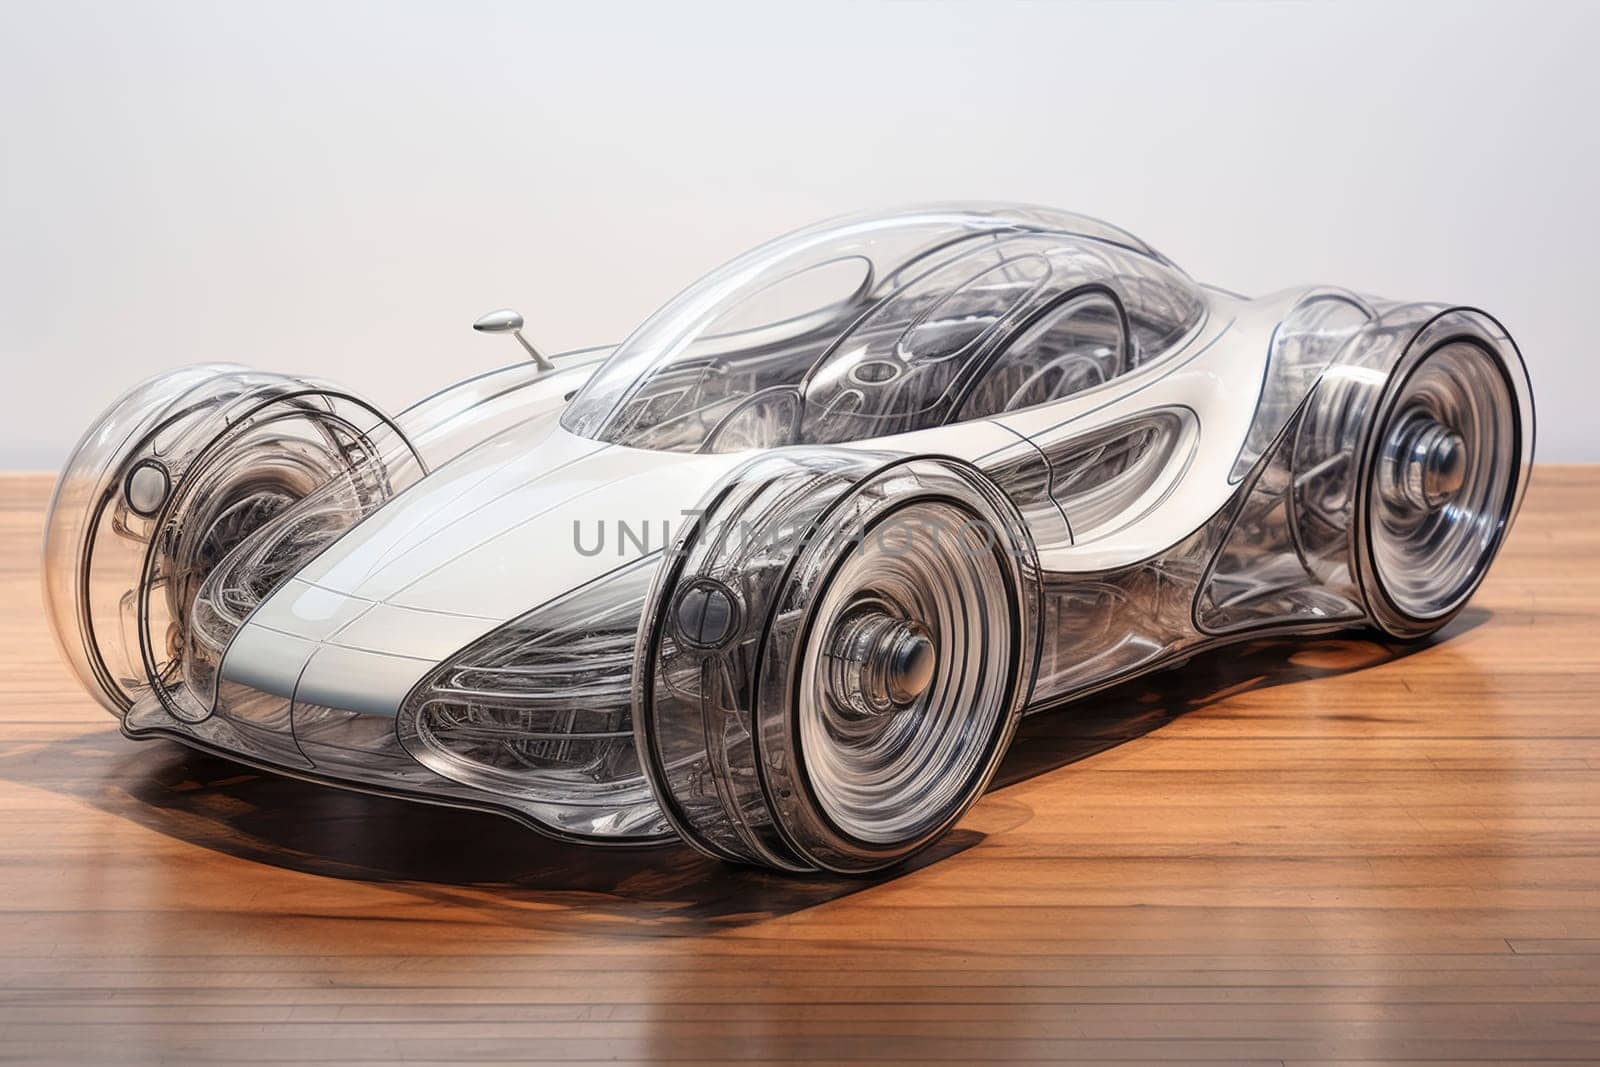 Futuristic transparent car design concept on wooden floor. Innovation and technology concept. Design for poster, banner